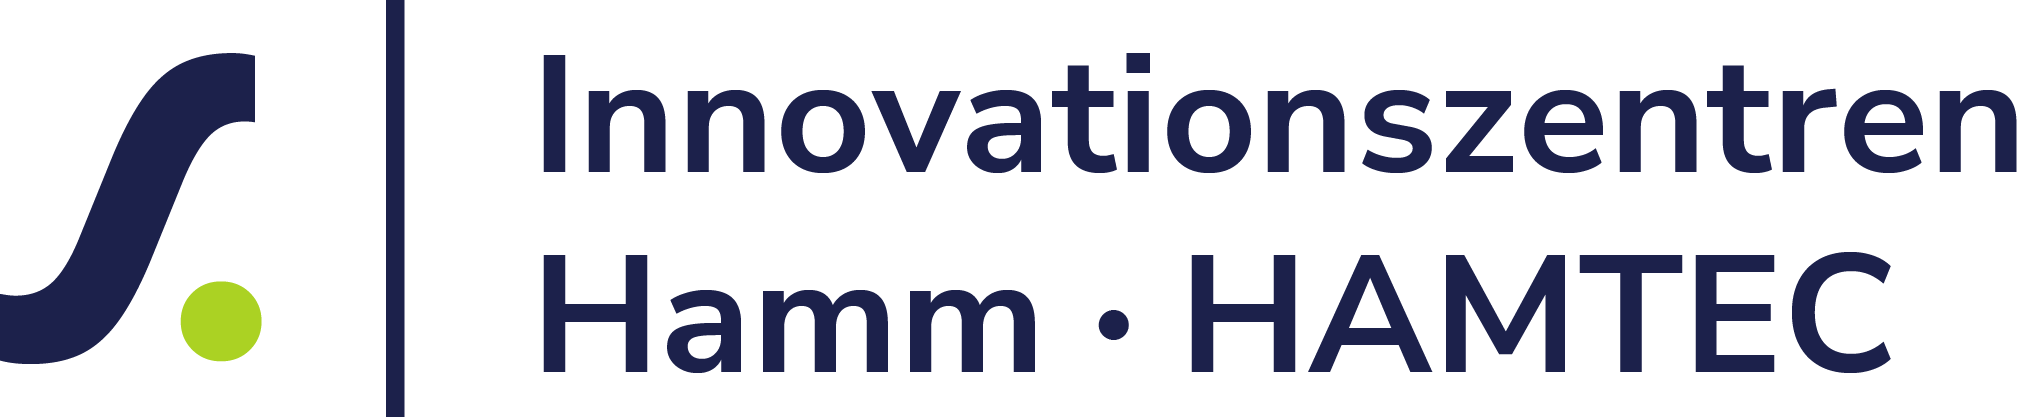 Innovationszentrum Hamtec - Partner der educatus GmbH